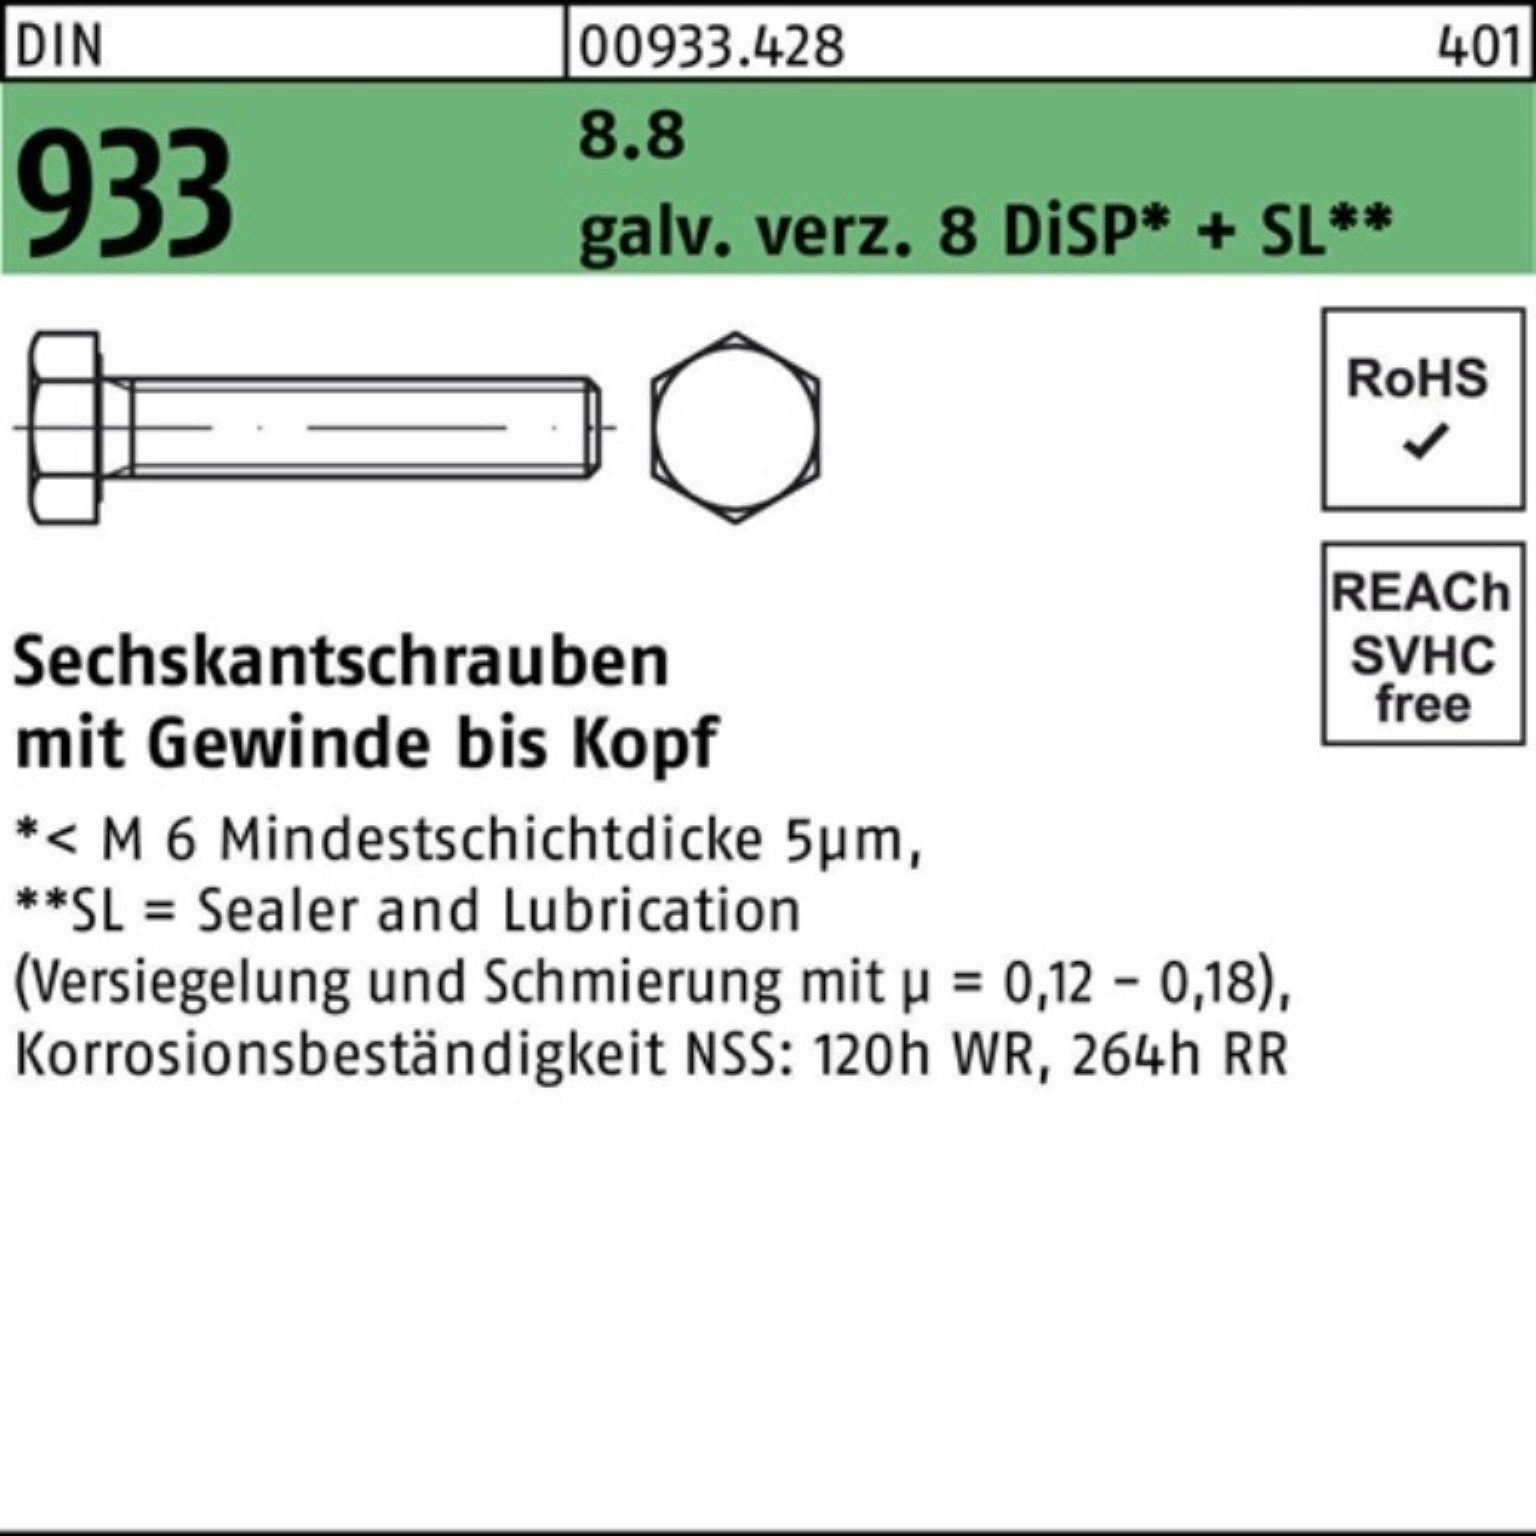 Reyher Sechskantschraube 100er Pack Sechskantschraube DIN 933 VG M16x 25 8.8 gal Zn 8 DiSP + SL